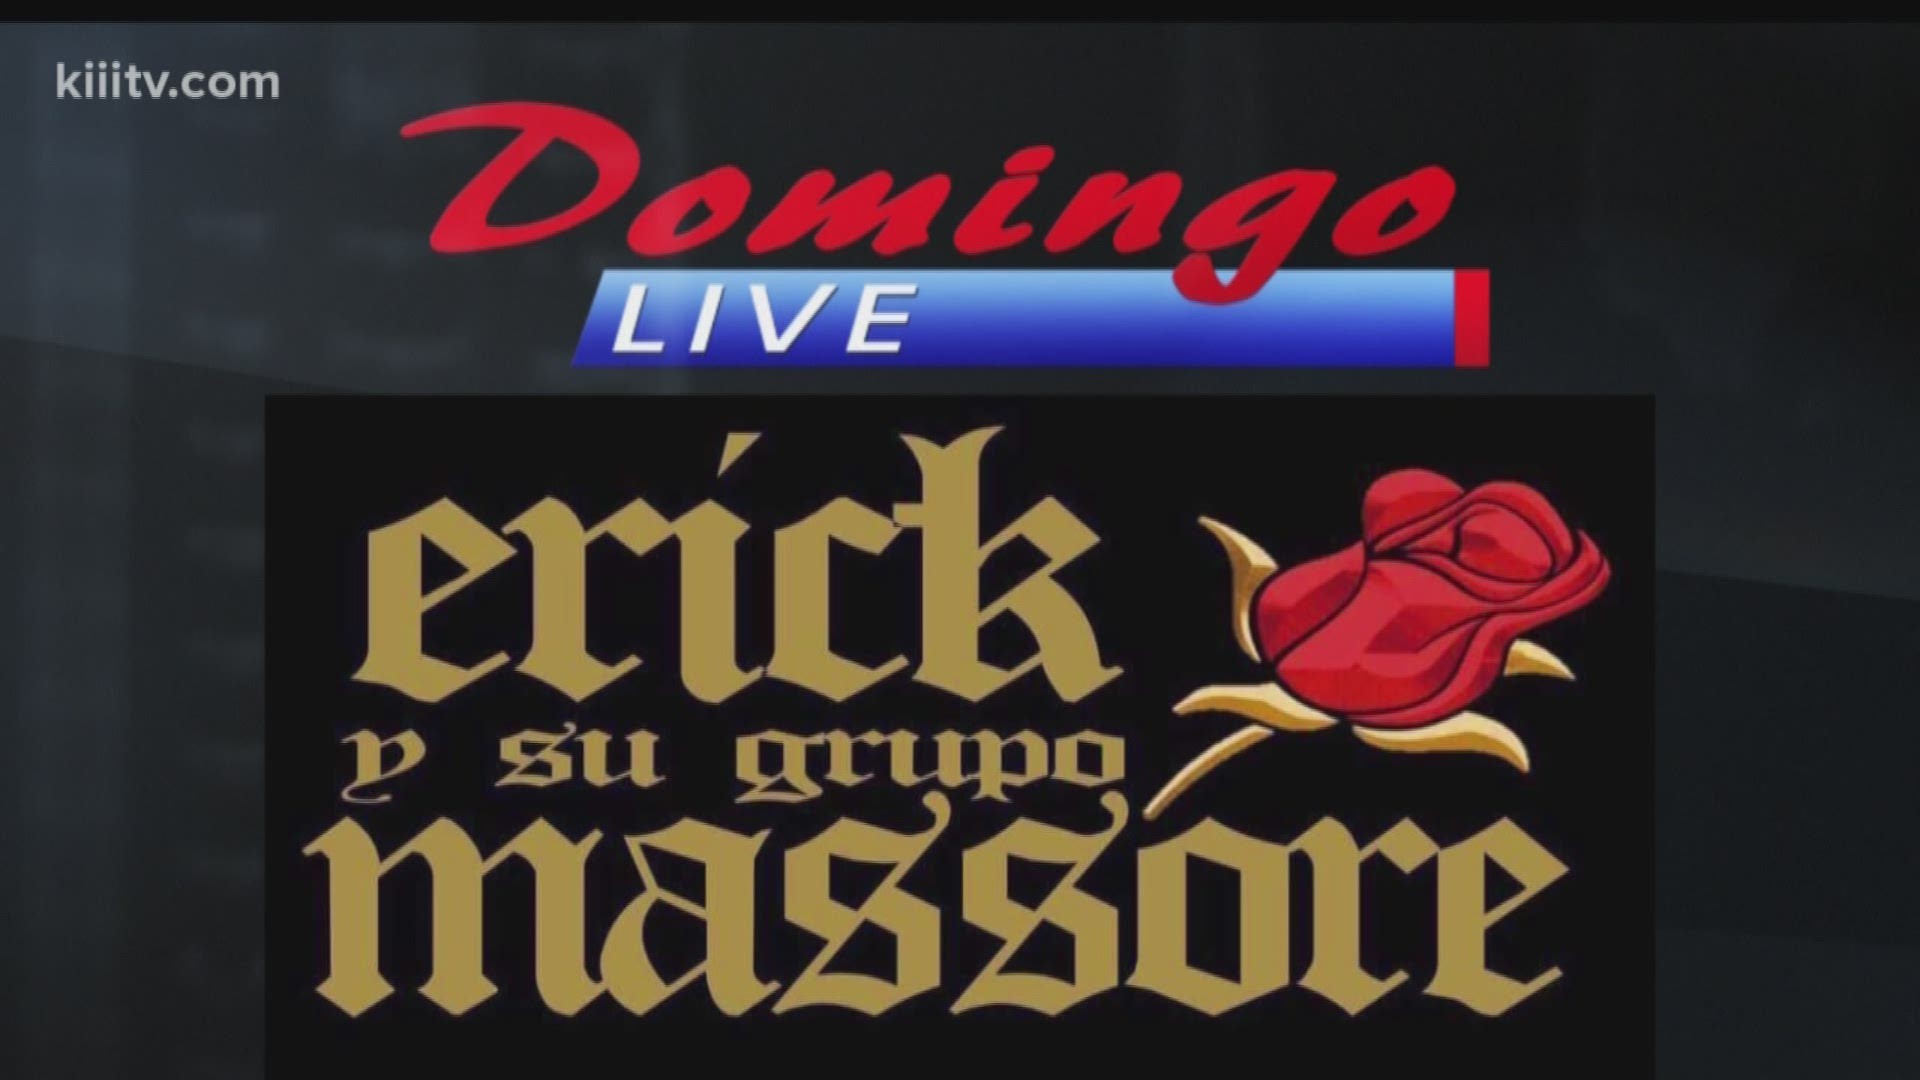 Erick Y Su Grupo Massore Performing "Mi Clarinete" on Domingo Live